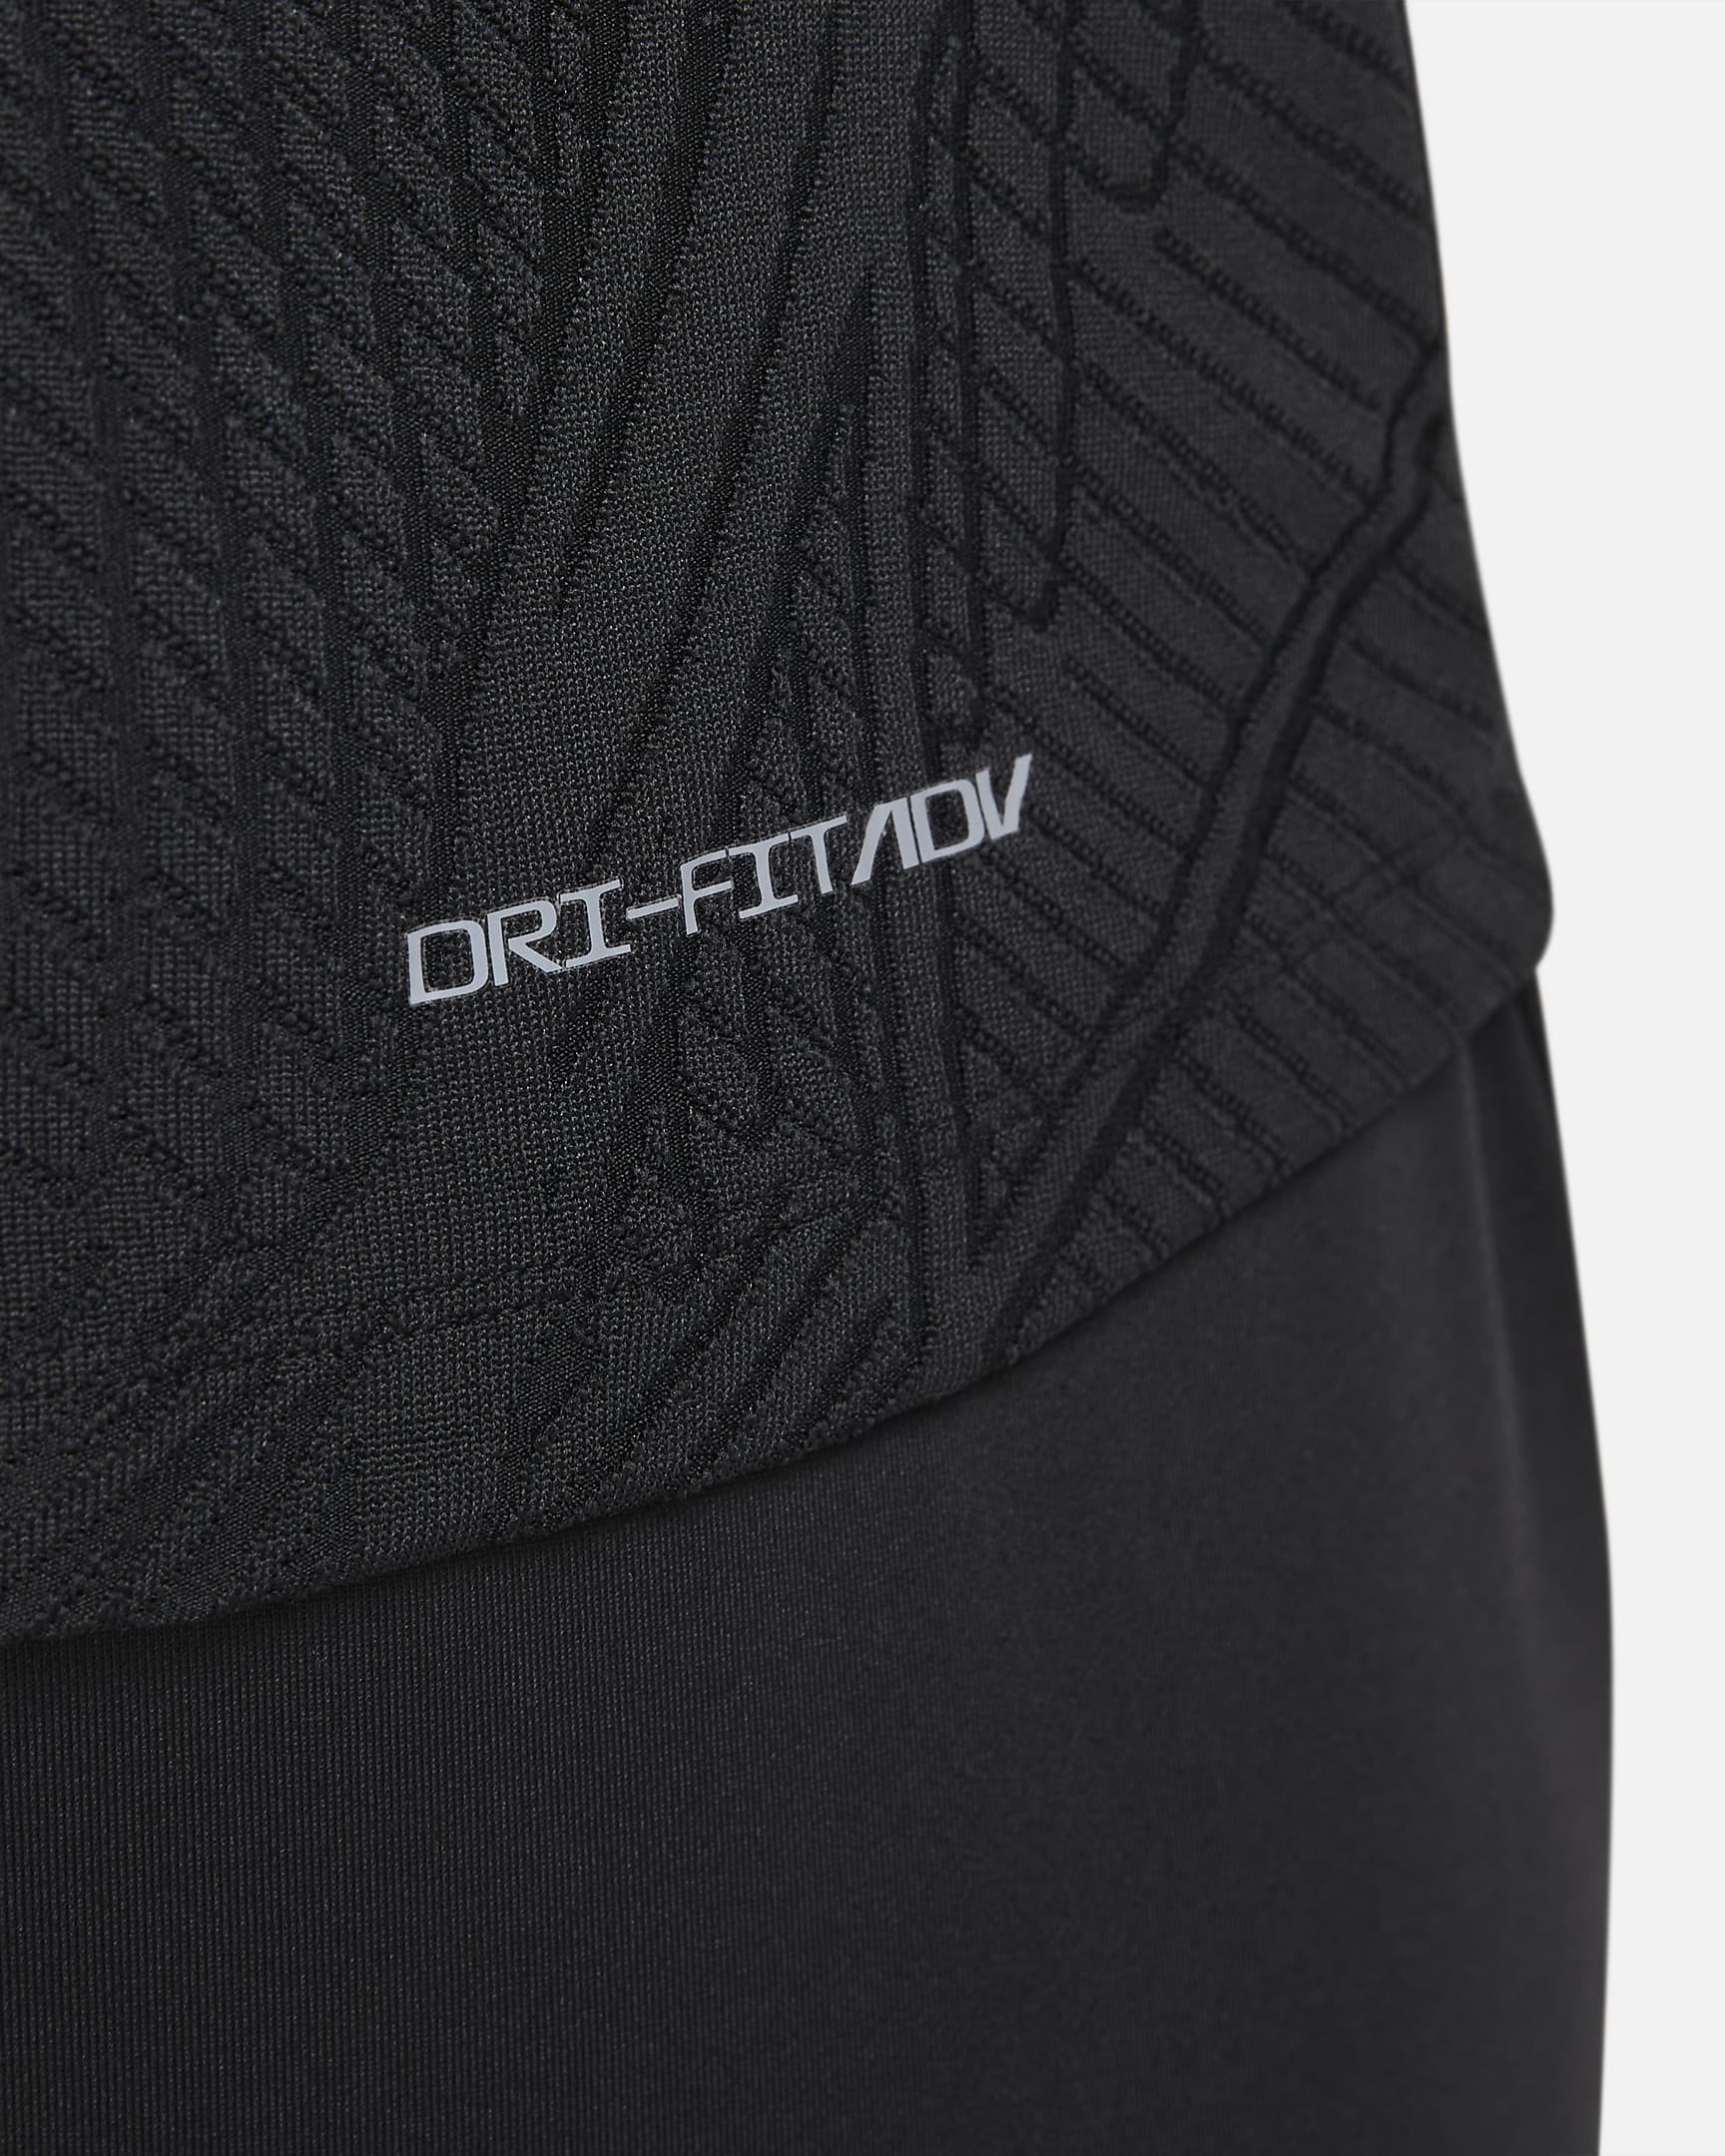 U.S. Strike Elite Men's Nike Dri-FIT ADV Knit Soccer Drill Top. Nike.com